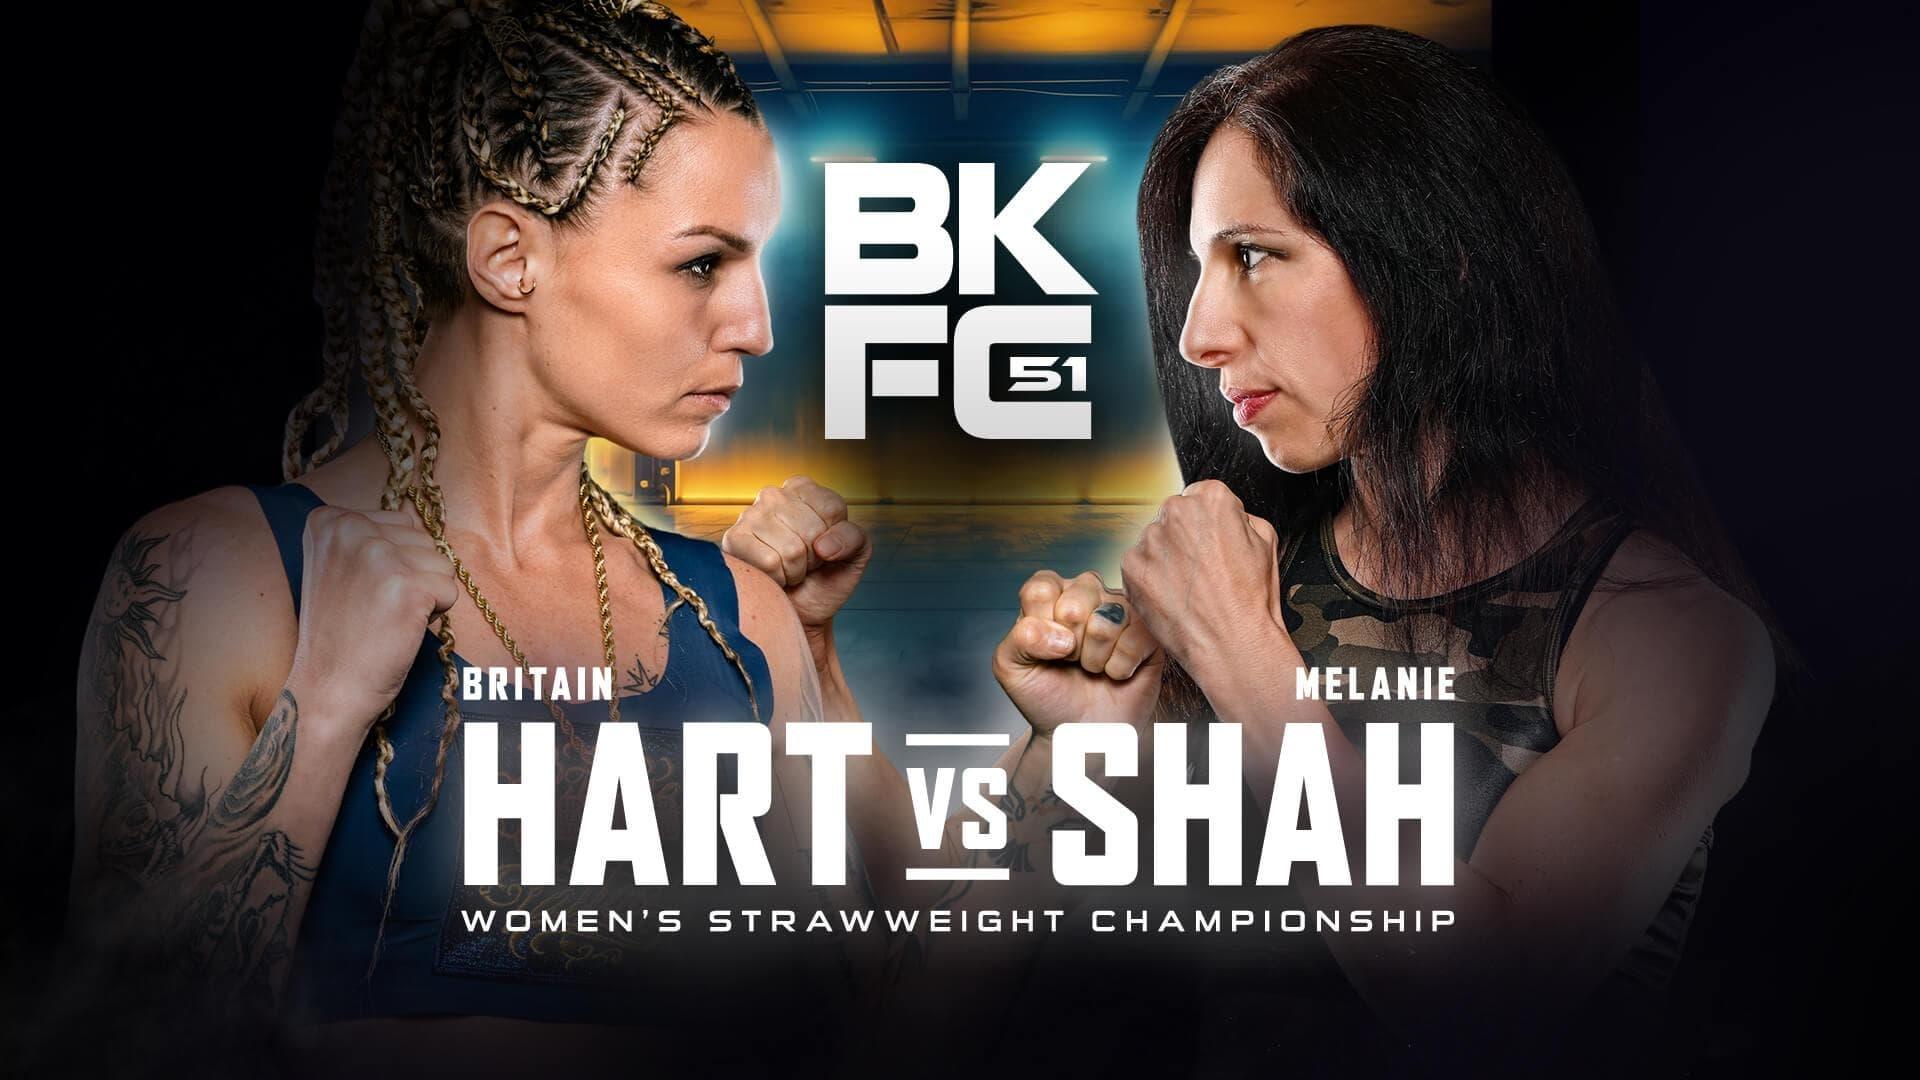 BKFC 51: Hart vs. Shah backdrop